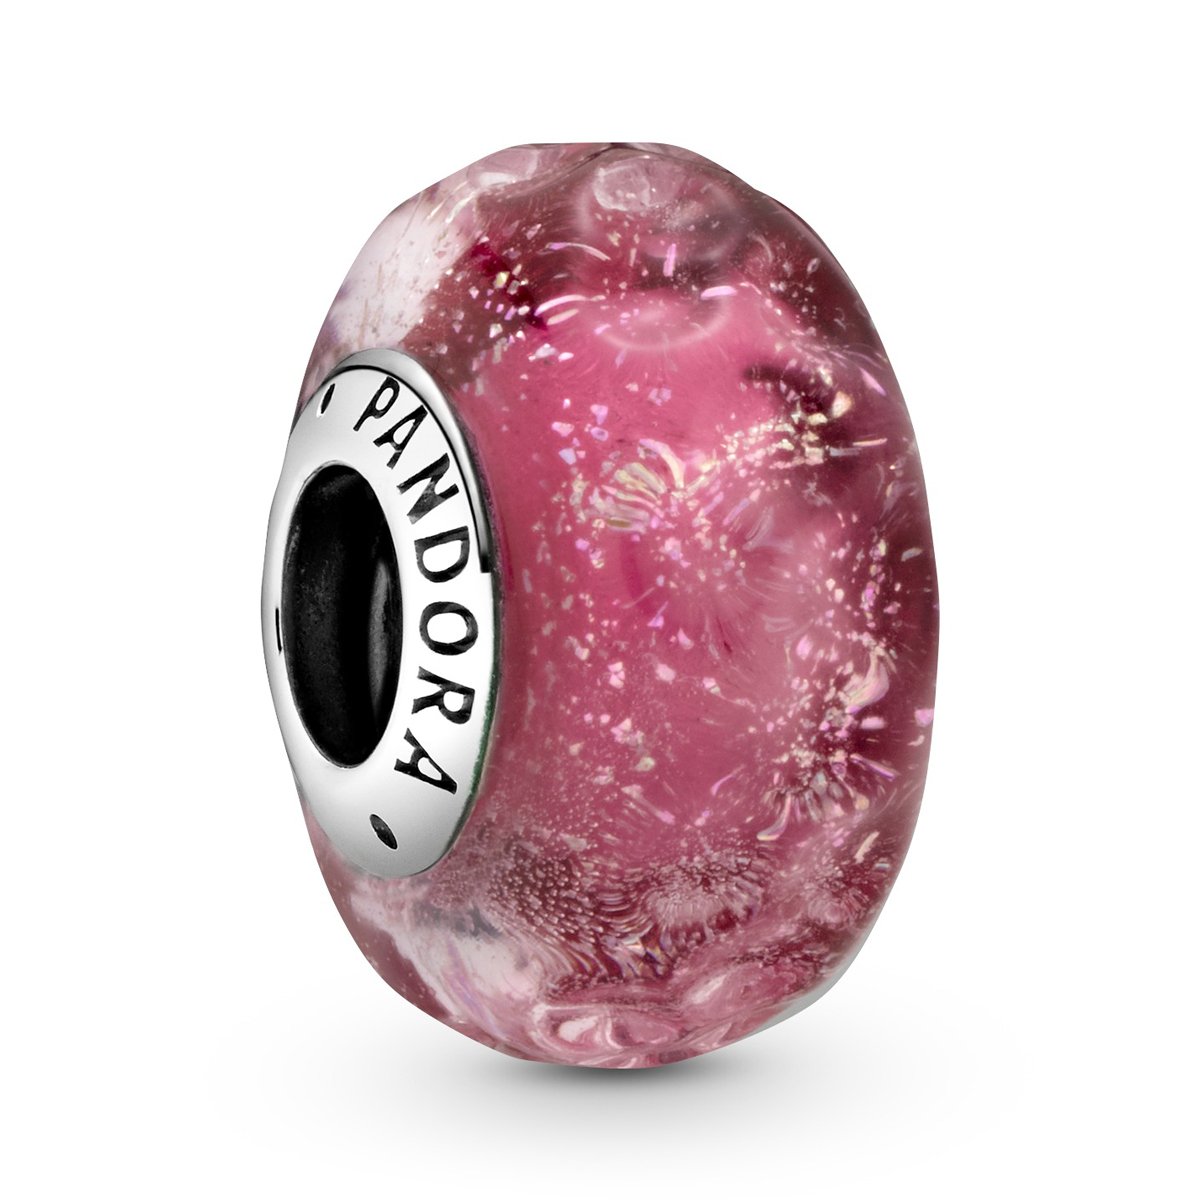 Wavy Fancy Pink Murano Glass Charm